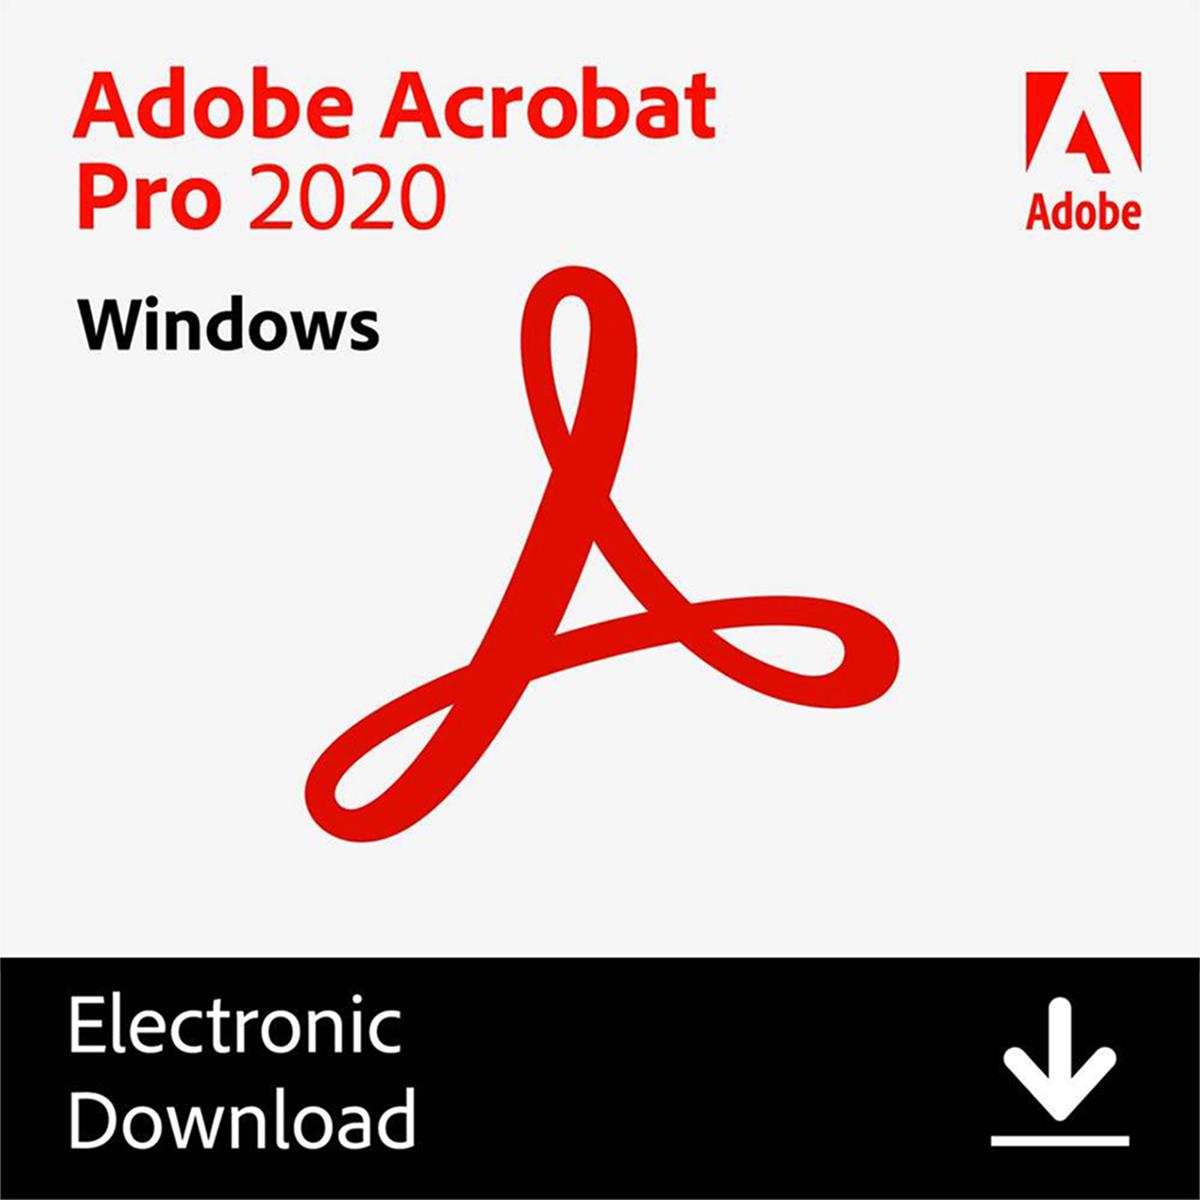 Image of Adobe Acrobat Pro 2020 Perpetual License for Windows